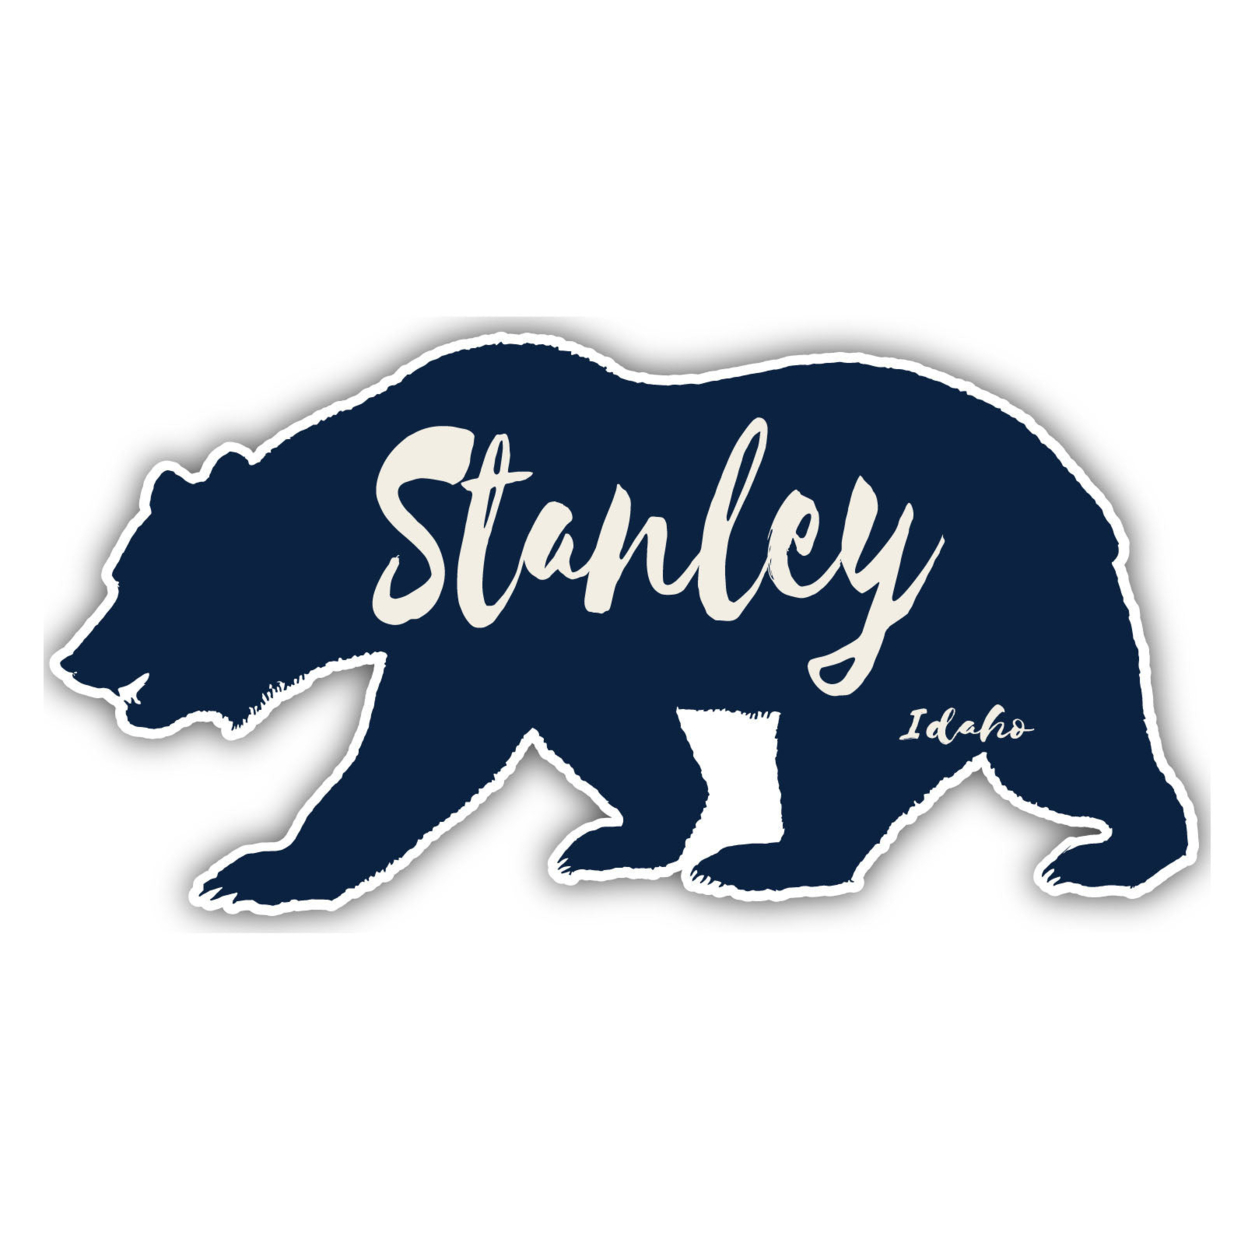 Stanley Idaho Souvenir Decorative Stickers (Choose Theme And Size) - Single Unit, 4-Inch, Adventures Awaits